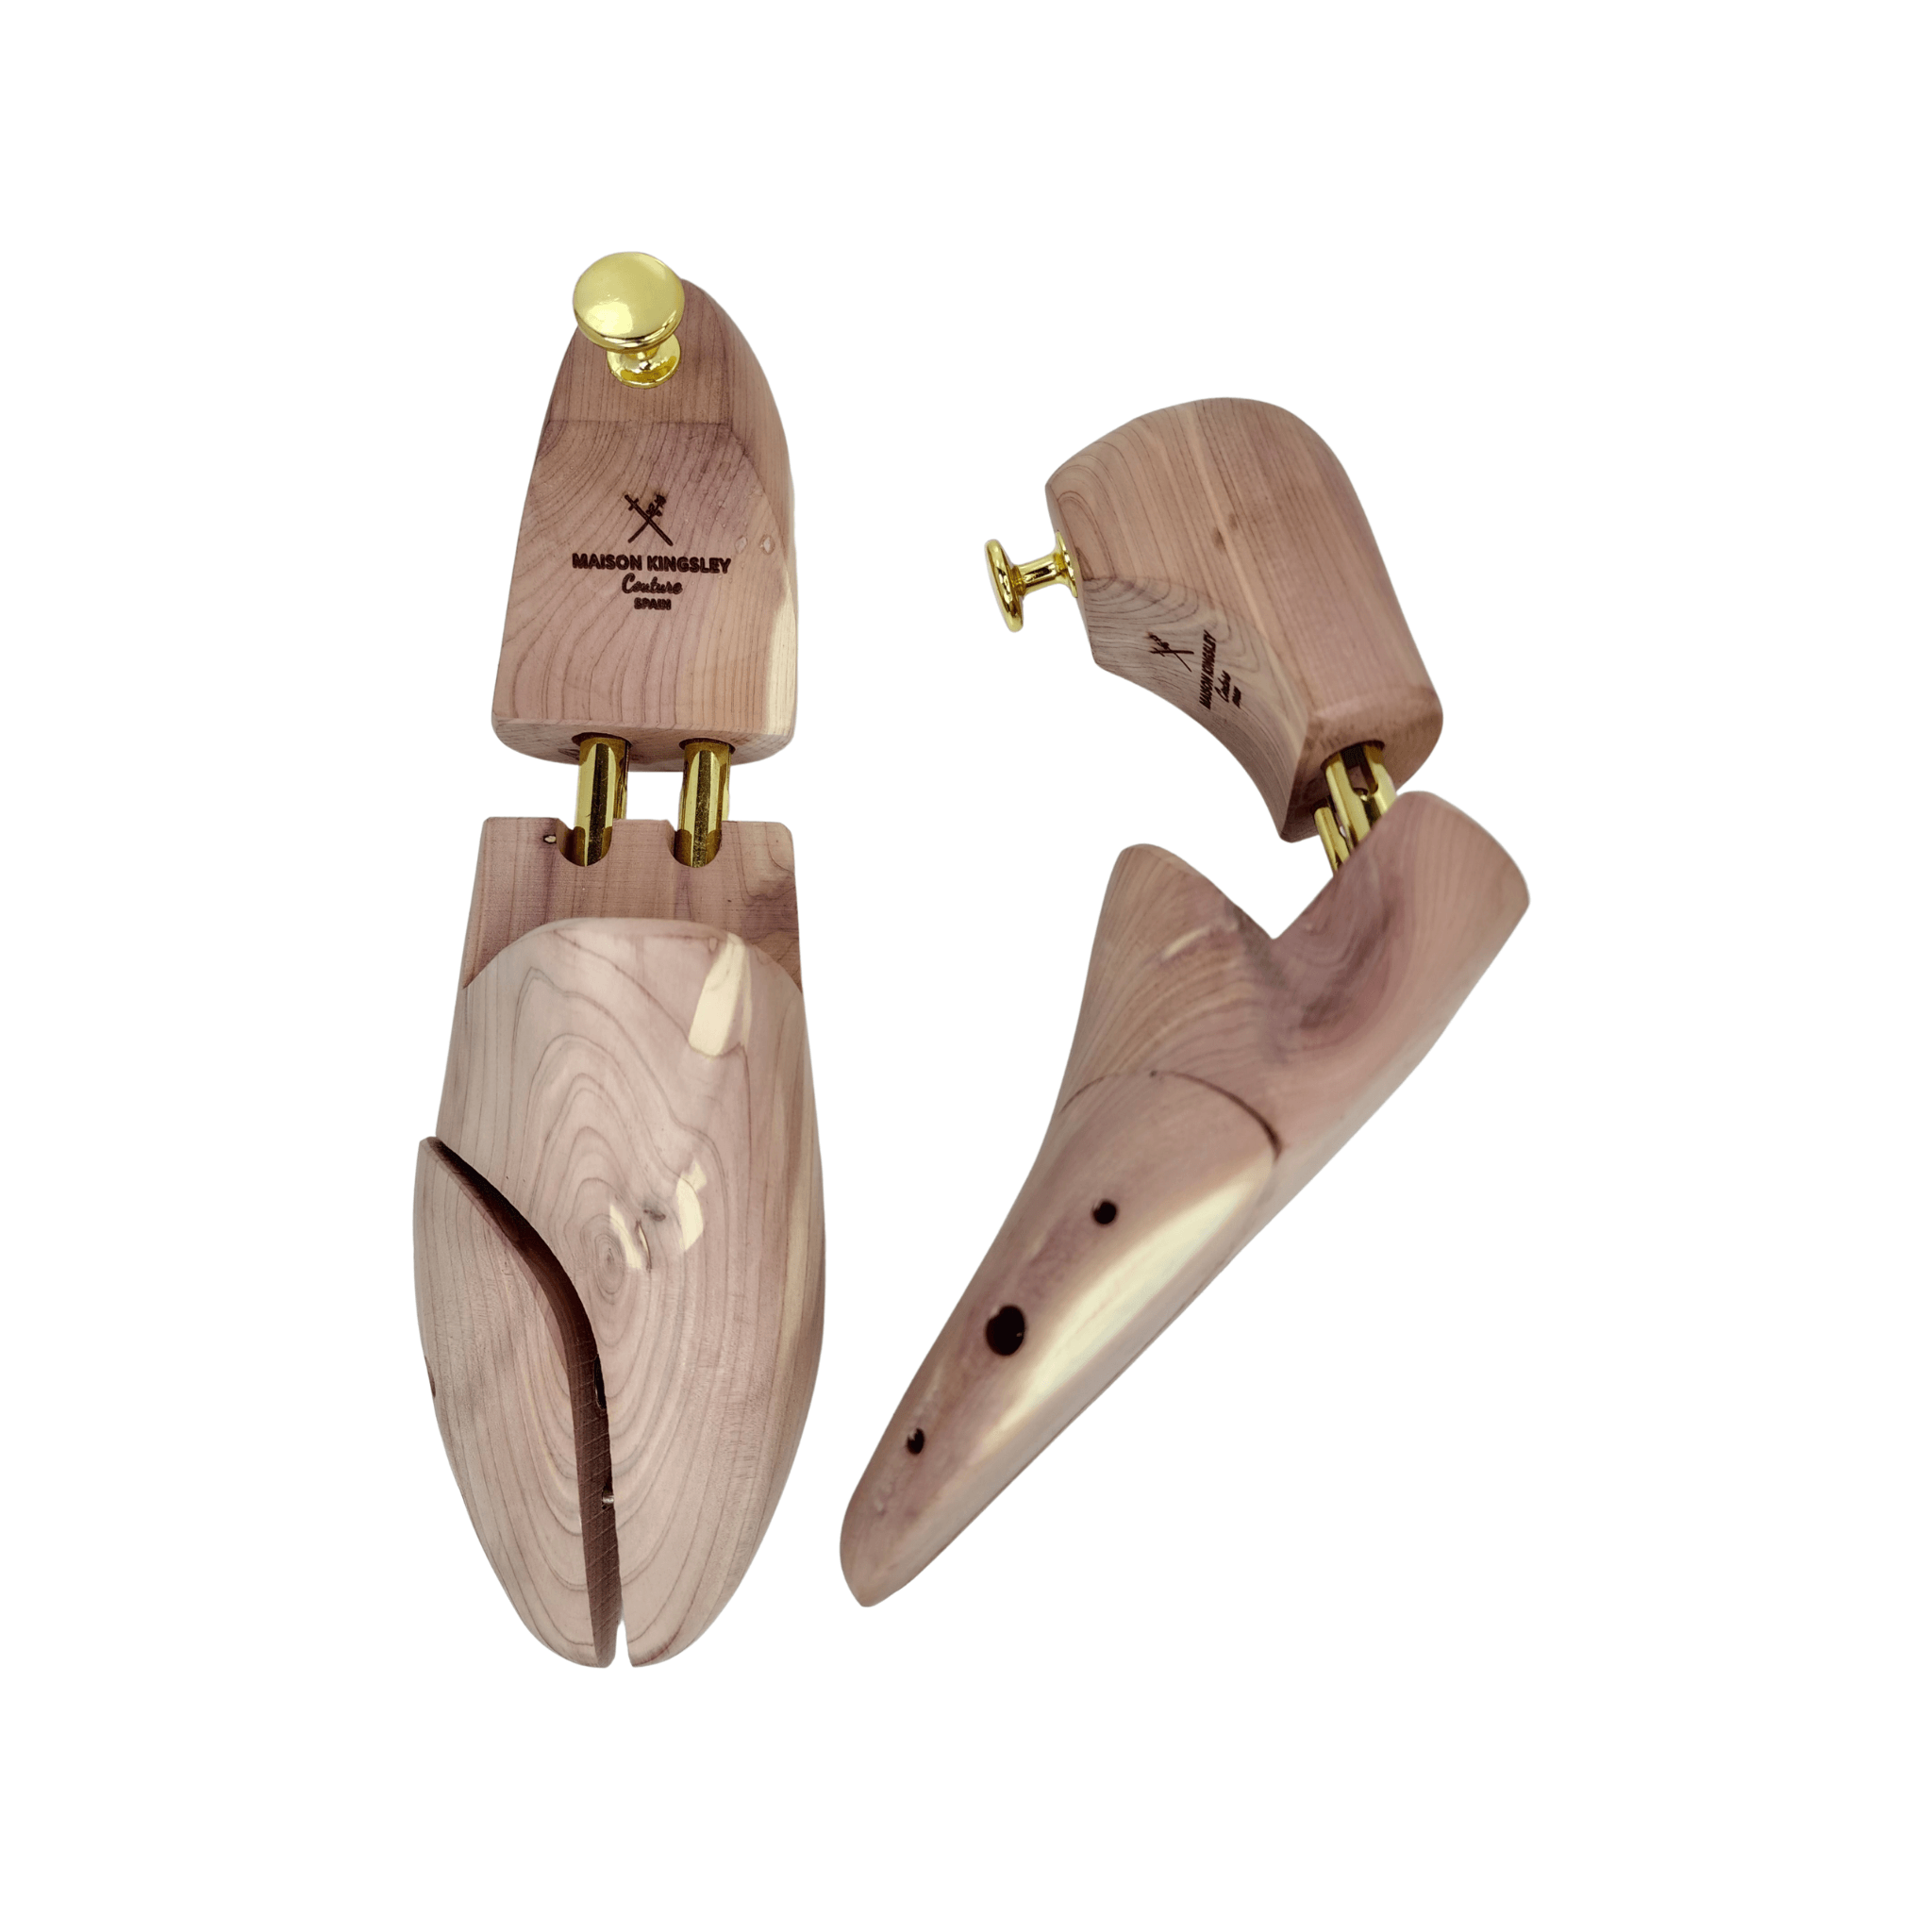 Hummingbird Art Sole Mustard Tall Heel Lux Suede Men's Chelsea Boots - Maison de Kingsley Couture Harmonie et Fureur Spain